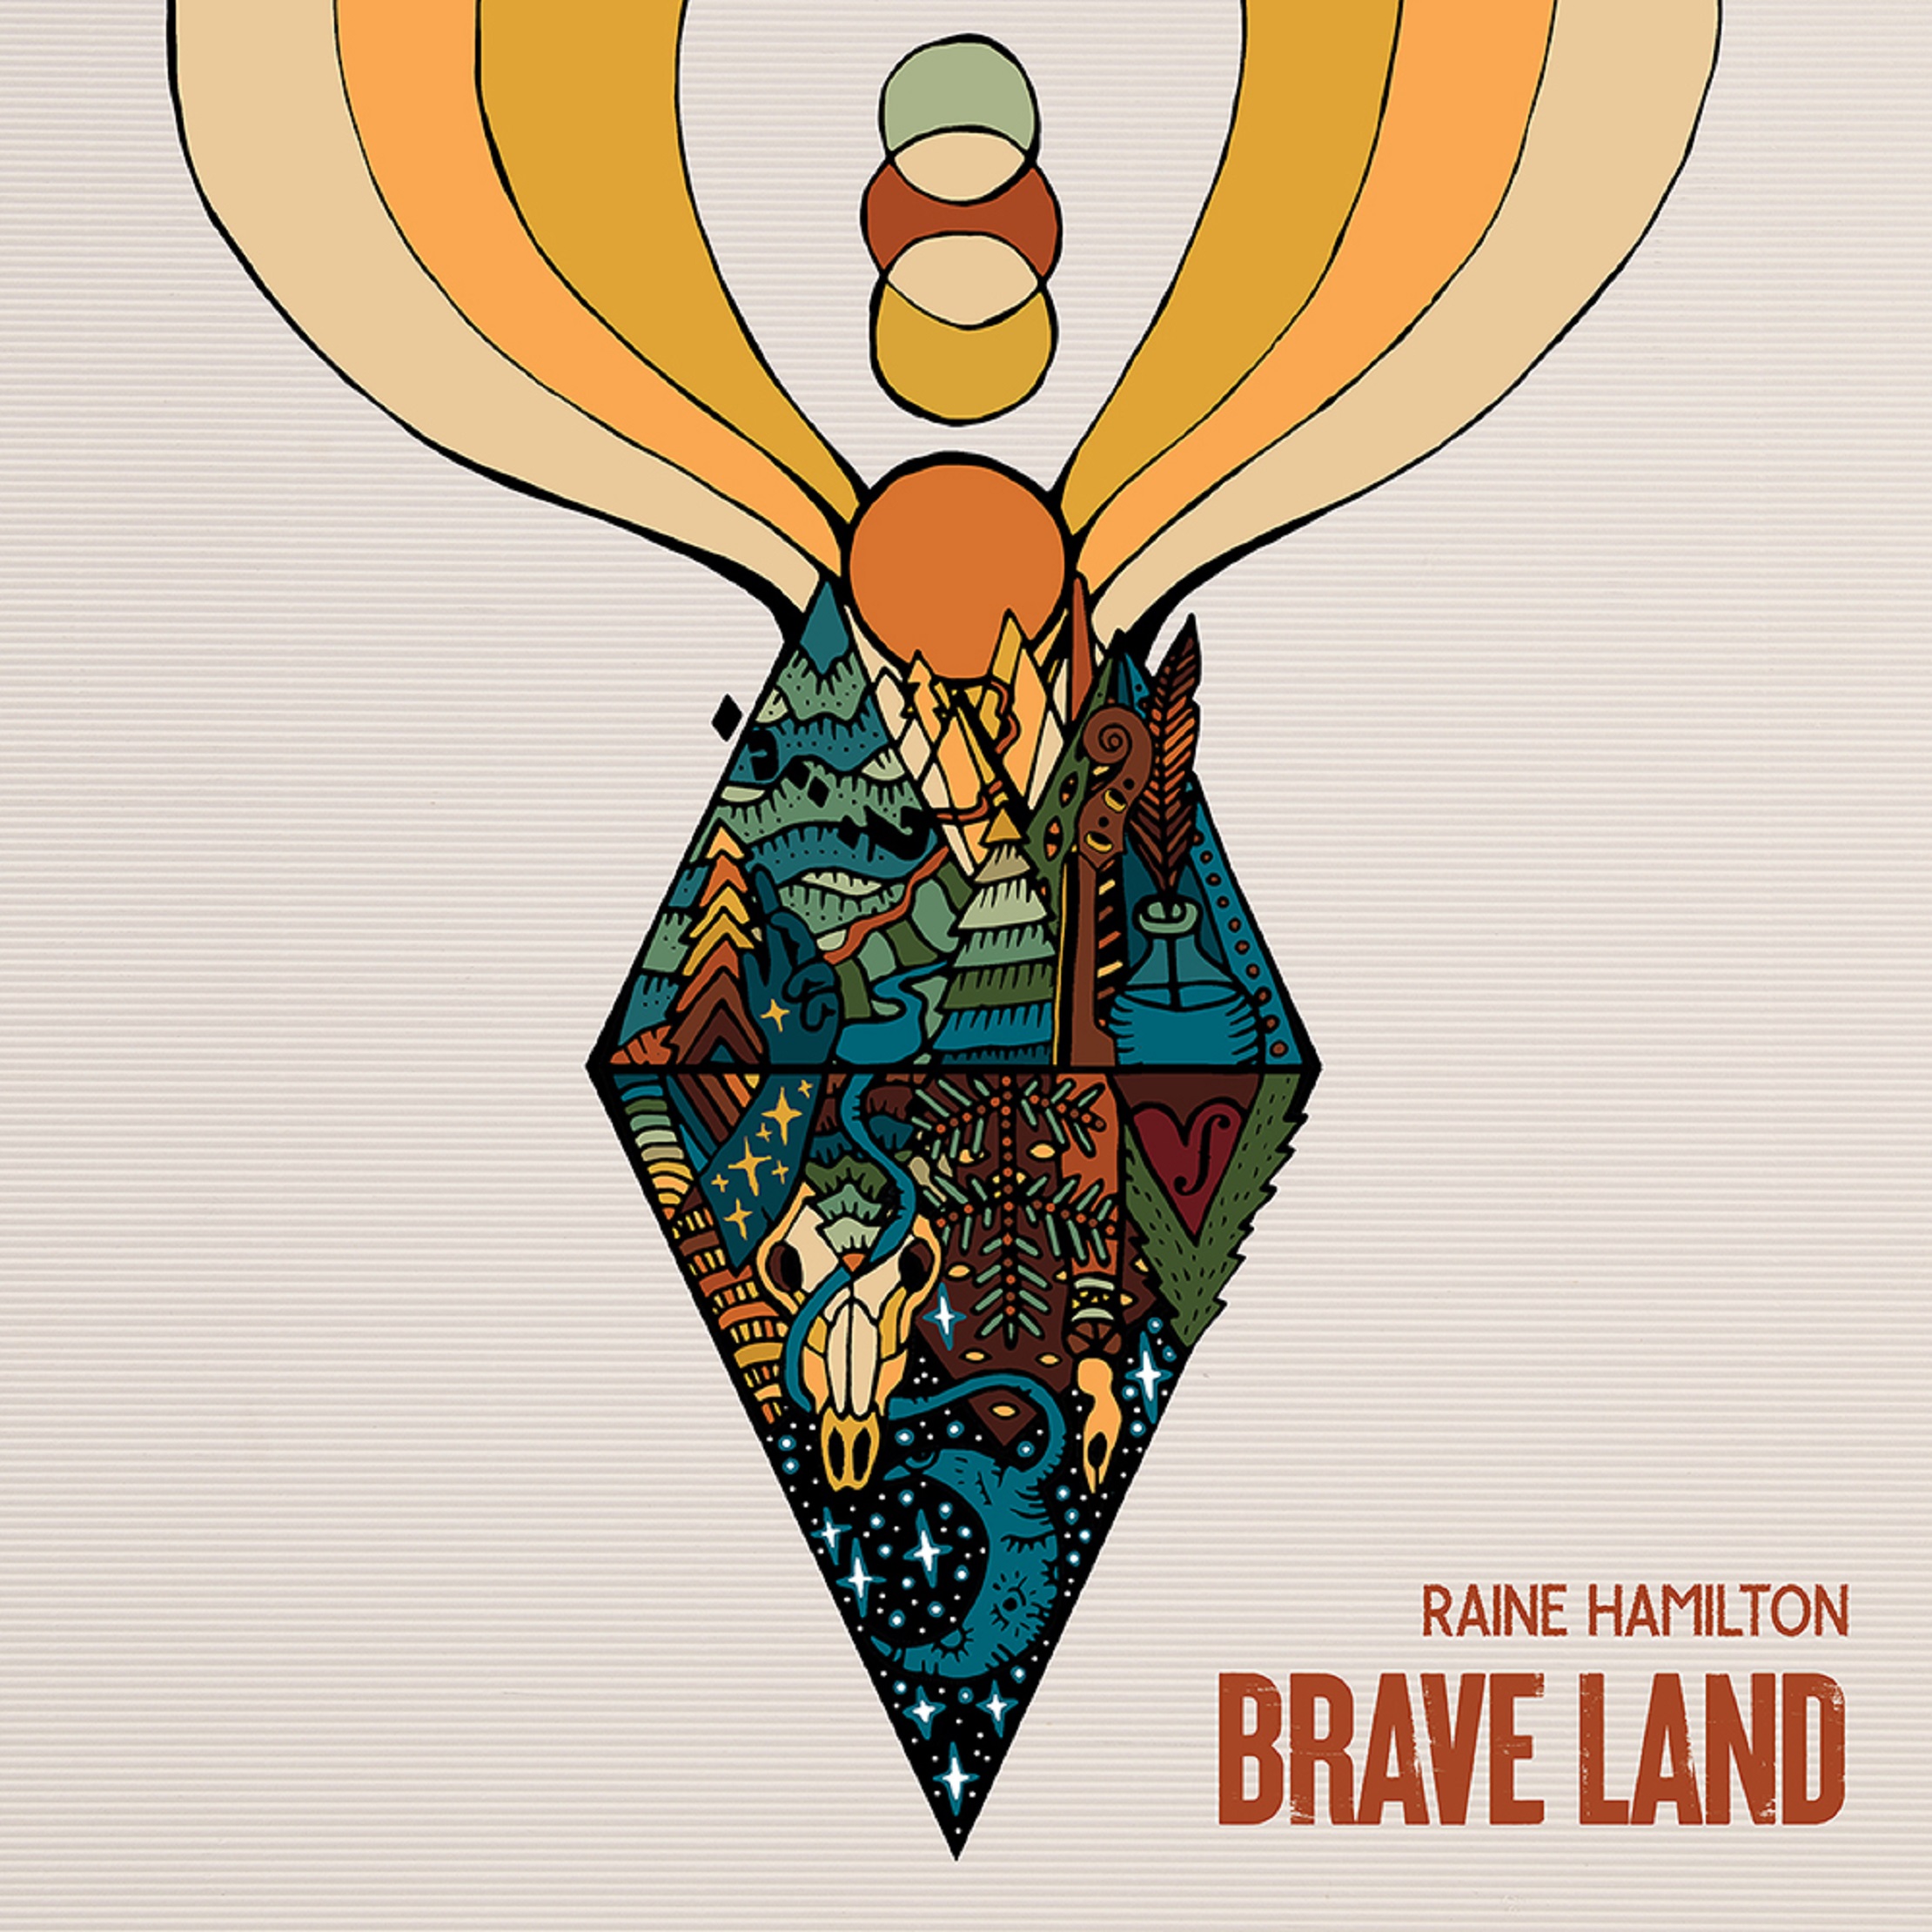 Raine Hamilton’s Brave Land Centers Around Courage and Connection